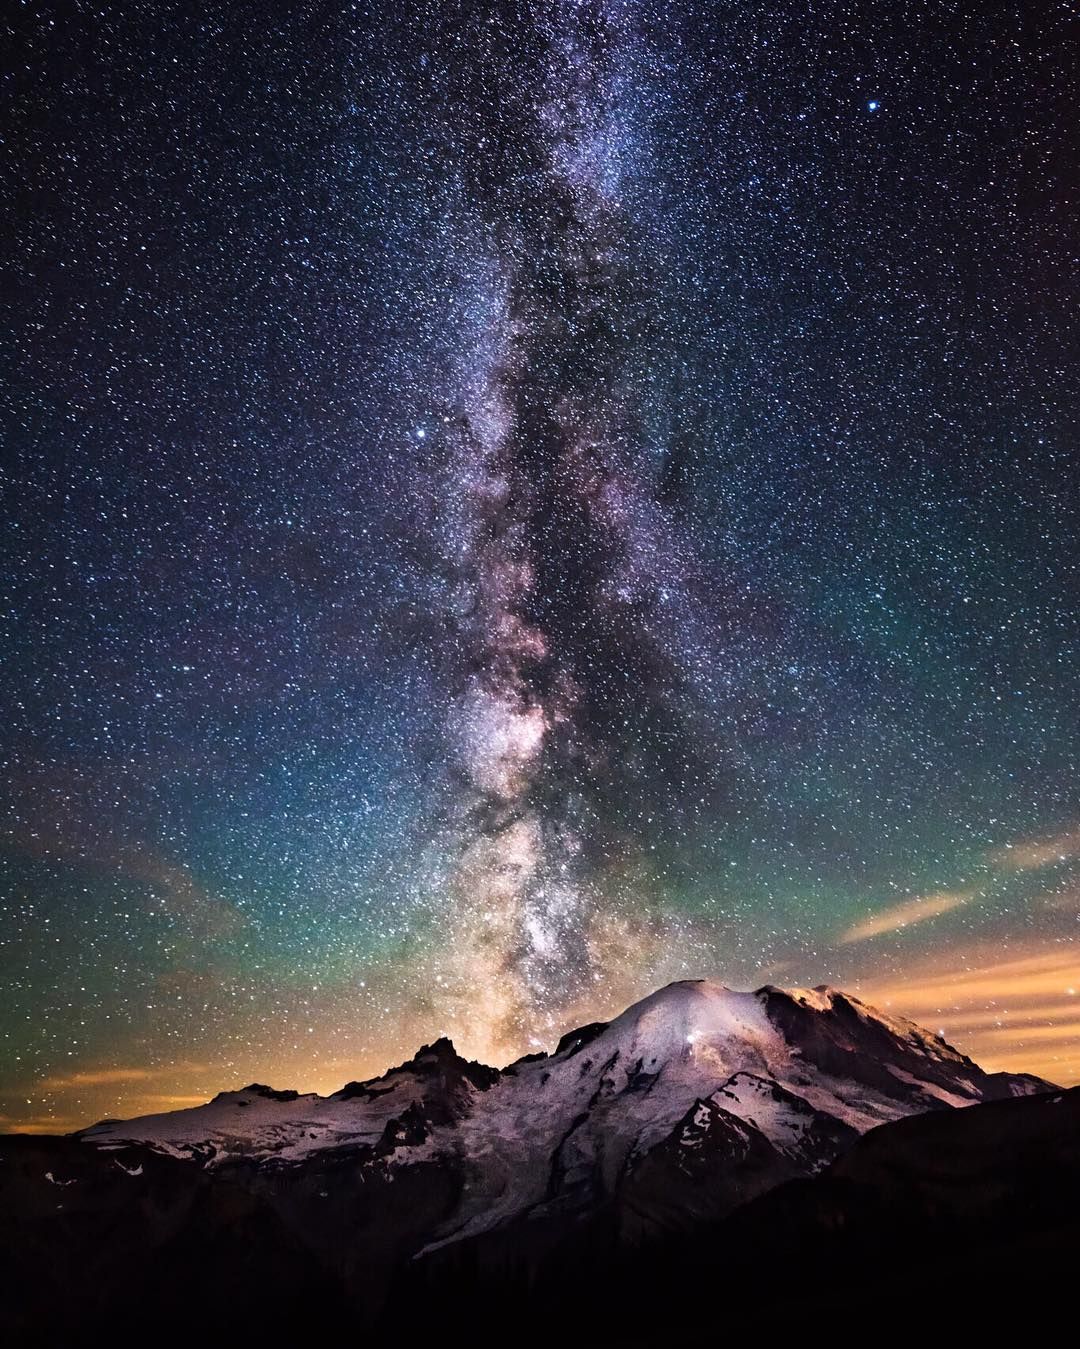 Millions of stars erupt in the night sky over Mount Rainier